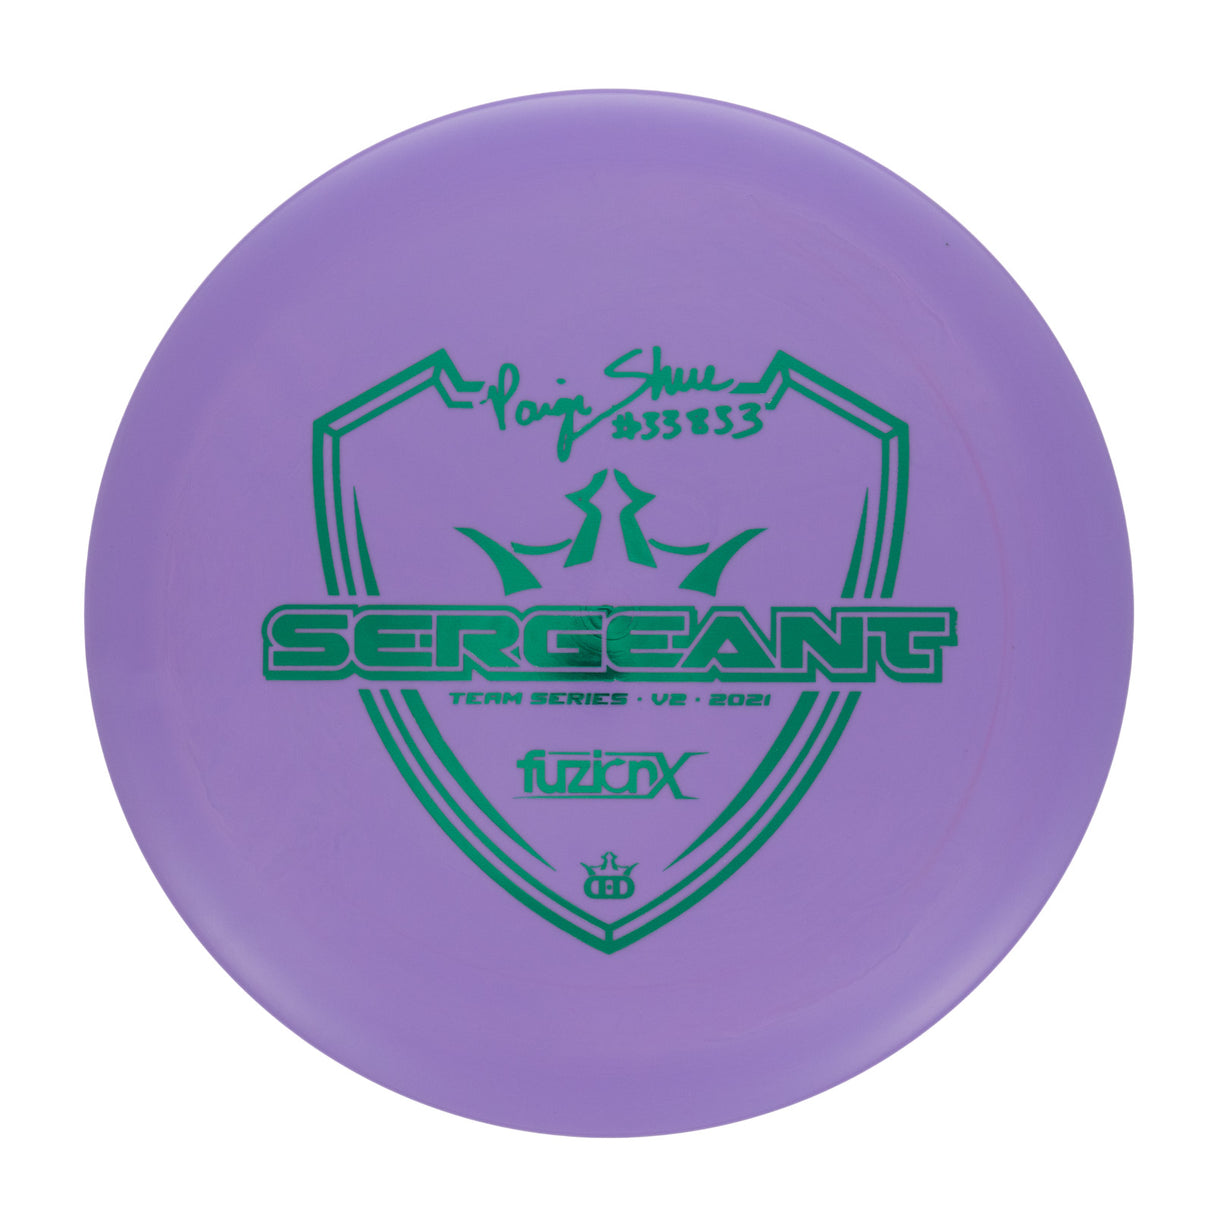 Dynamic Discs Sergeant - Paige Shue 2021 Team Series V2 Fuzion-X 177g | Style 0001